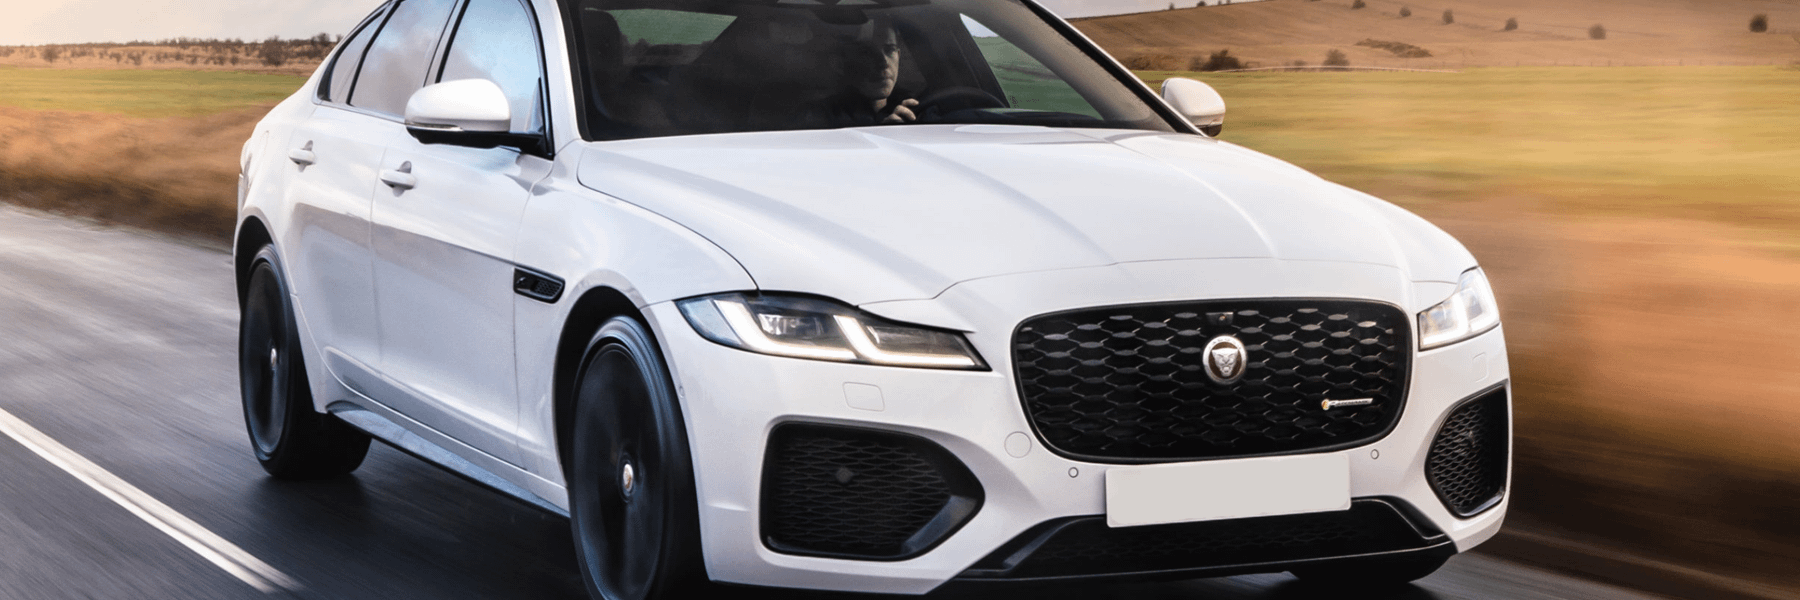 2021 Jaguar XF Review: Small Things Made Big